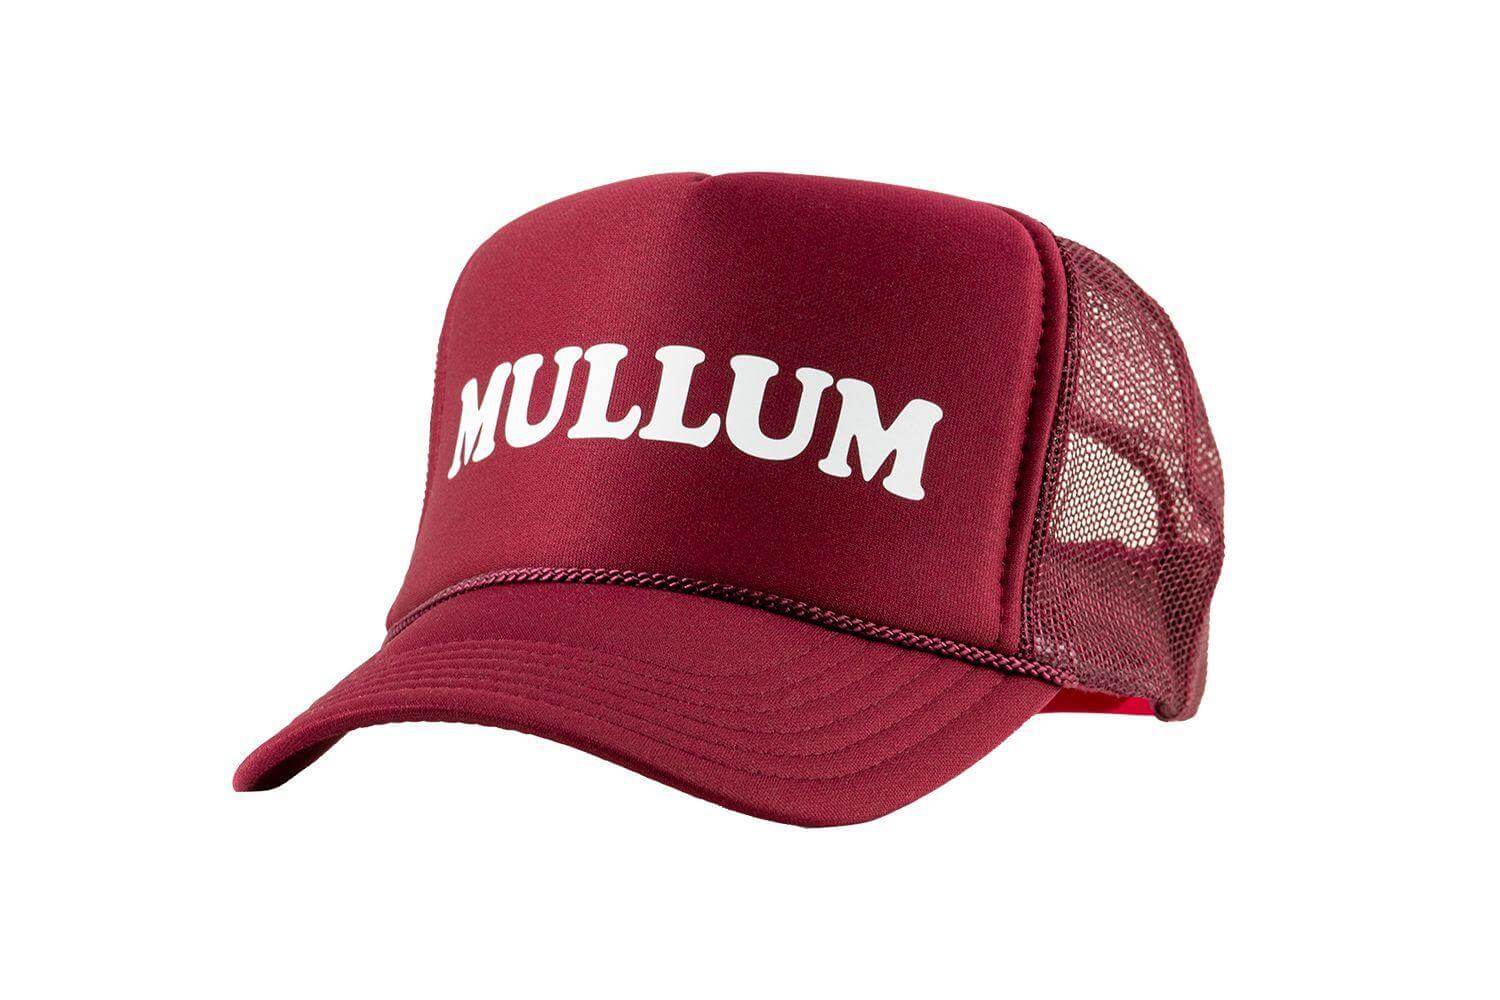 Mullumbimby high crown trucker cap with mesh back and snapback - Tropic Trucker Australia®